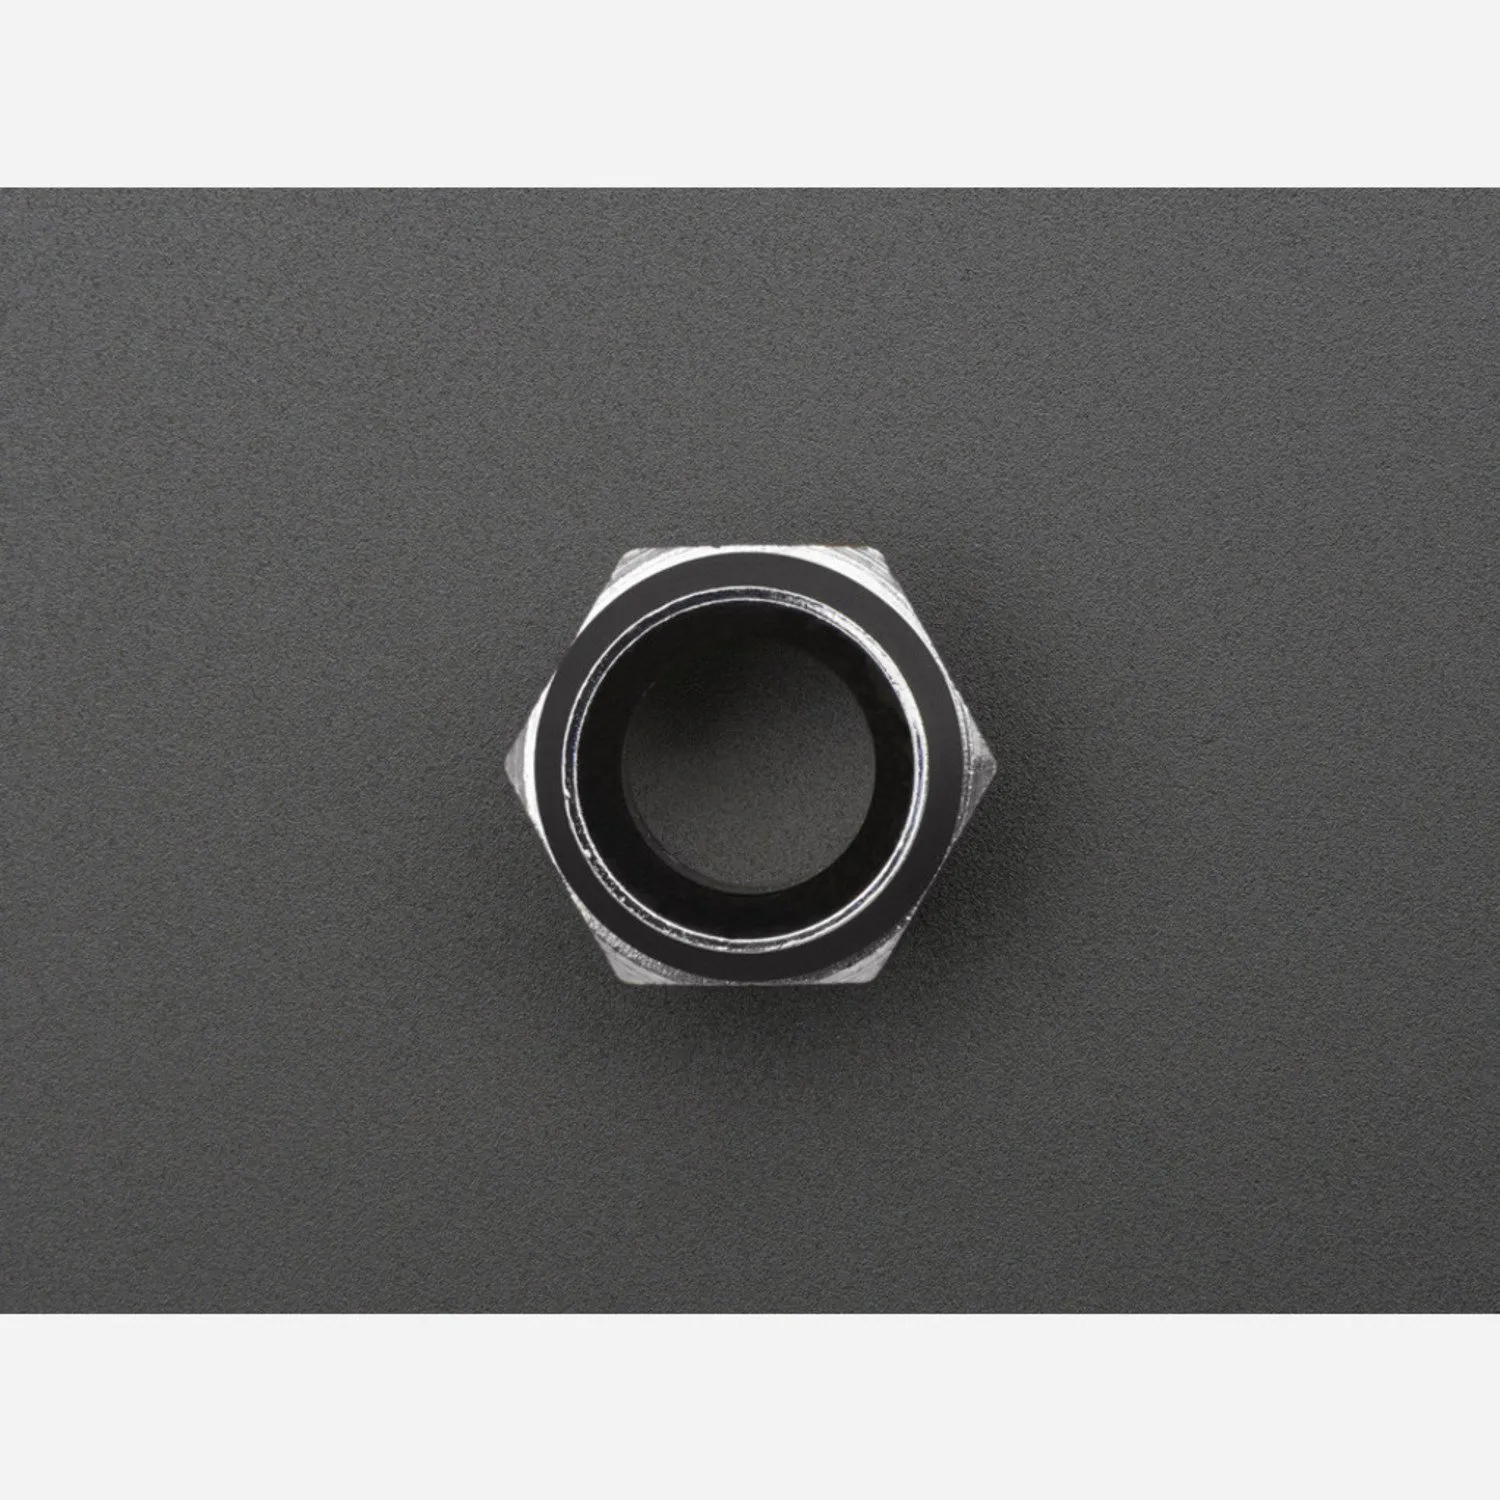 Photo of 8mm Chromed Metal Wide Bevel LED Holder - Pack of 5